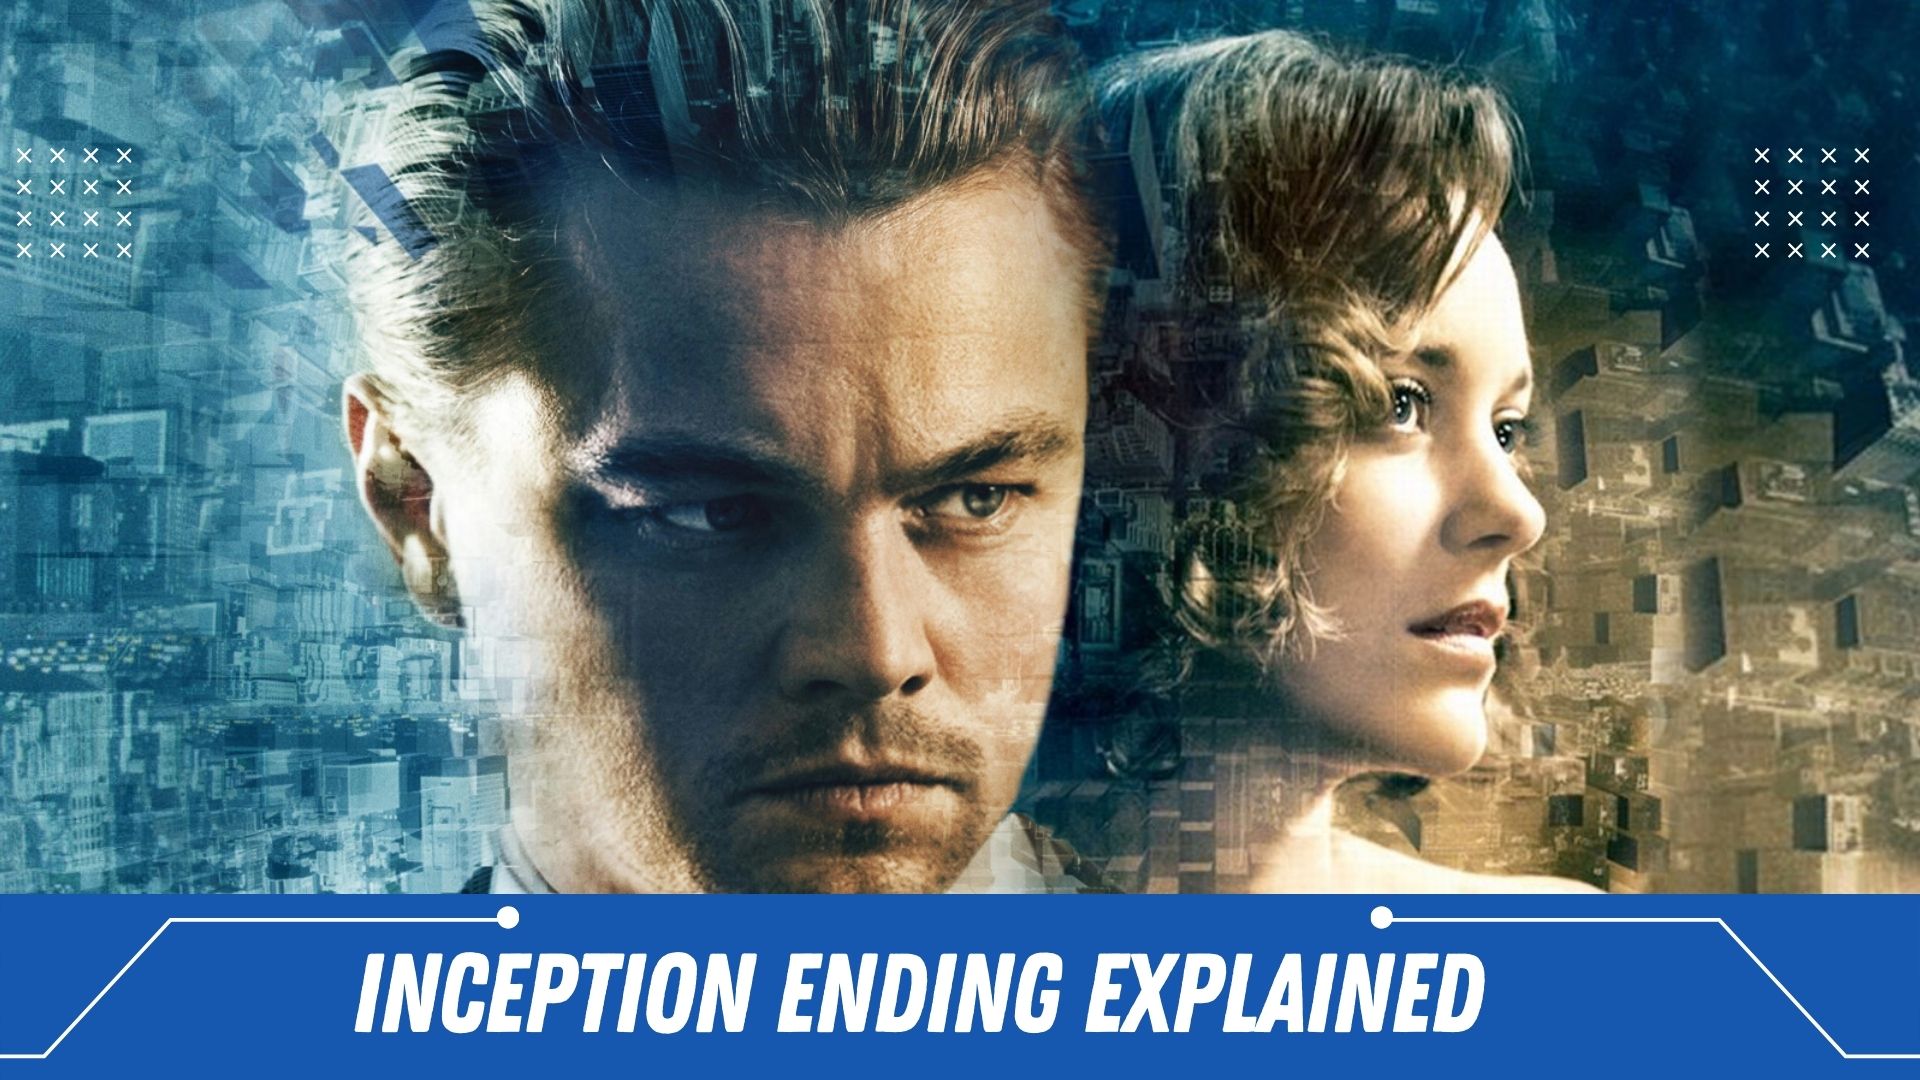 inception ending explained